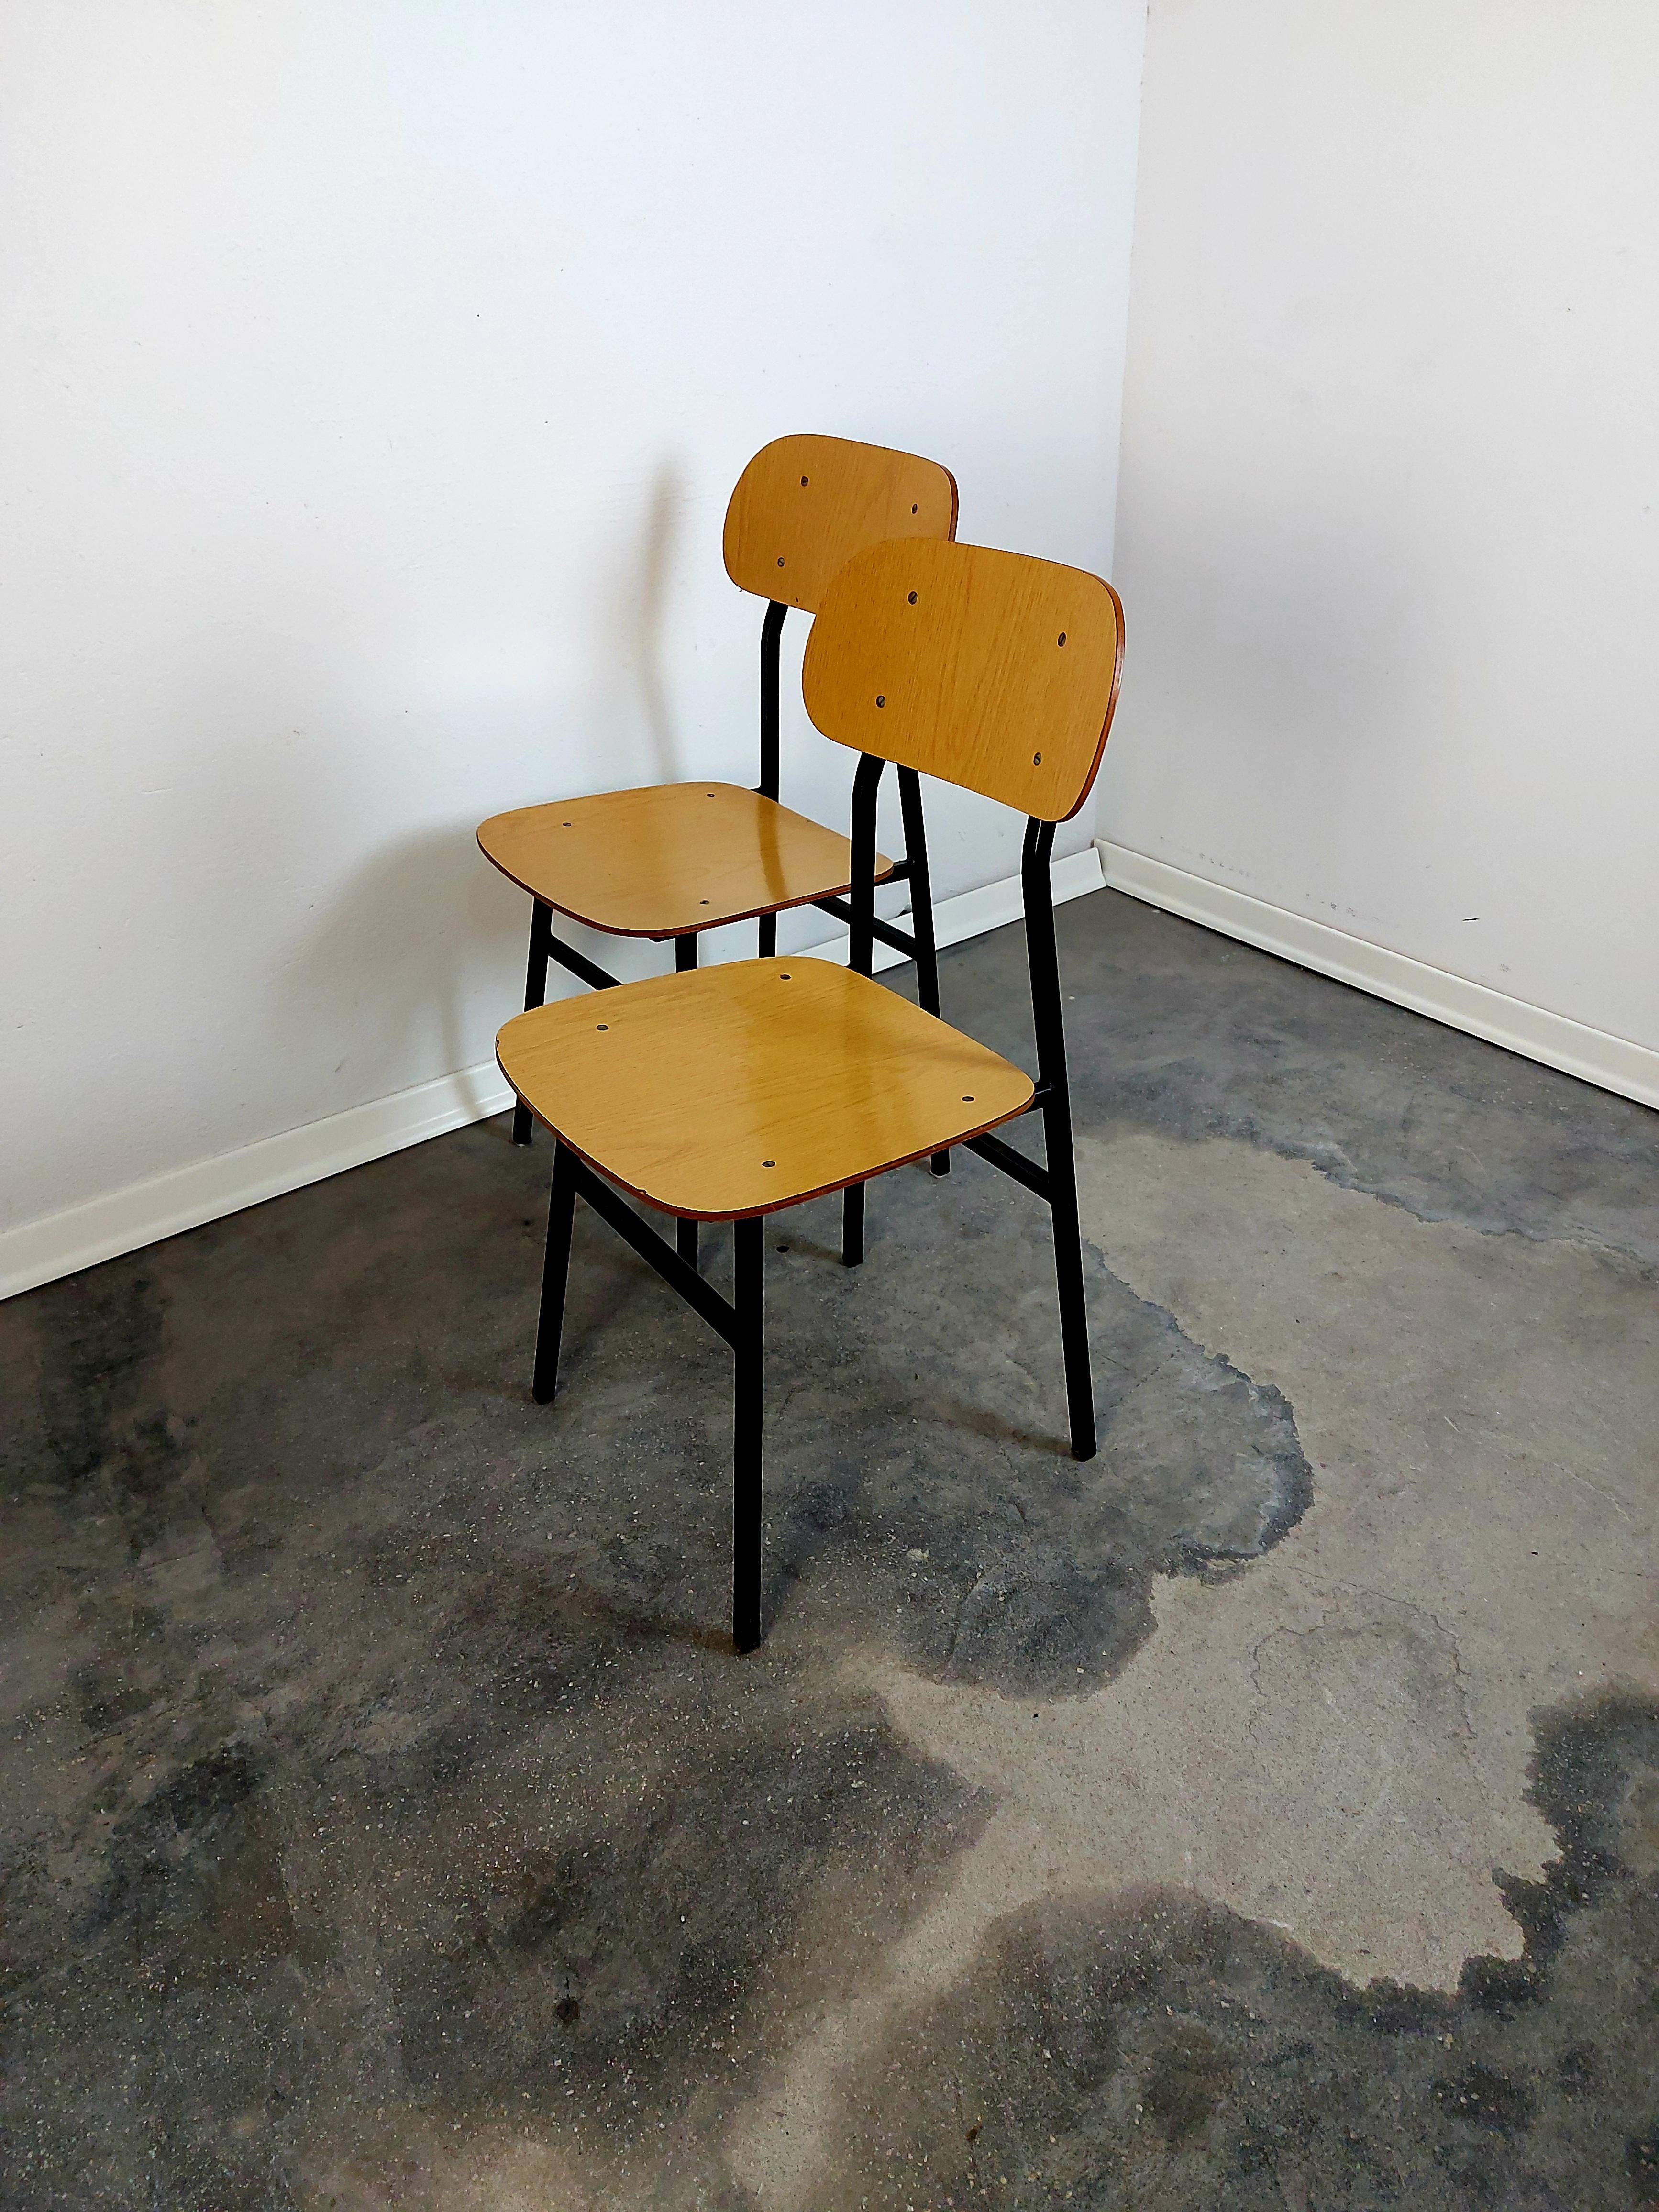 Vintage chairs, 1970s, BLACK frame
Manufacturer: Stol Kamnik, Slovenia, Yugoslavia
Materials: metal frame, plywood (LAMINATED)
Colour: Black frame, ligh brown LAMINATED seat and back
Dimensions: H – 82.50 cm, D – 39 cm, W – 39 cm, seat H – 44 cm.